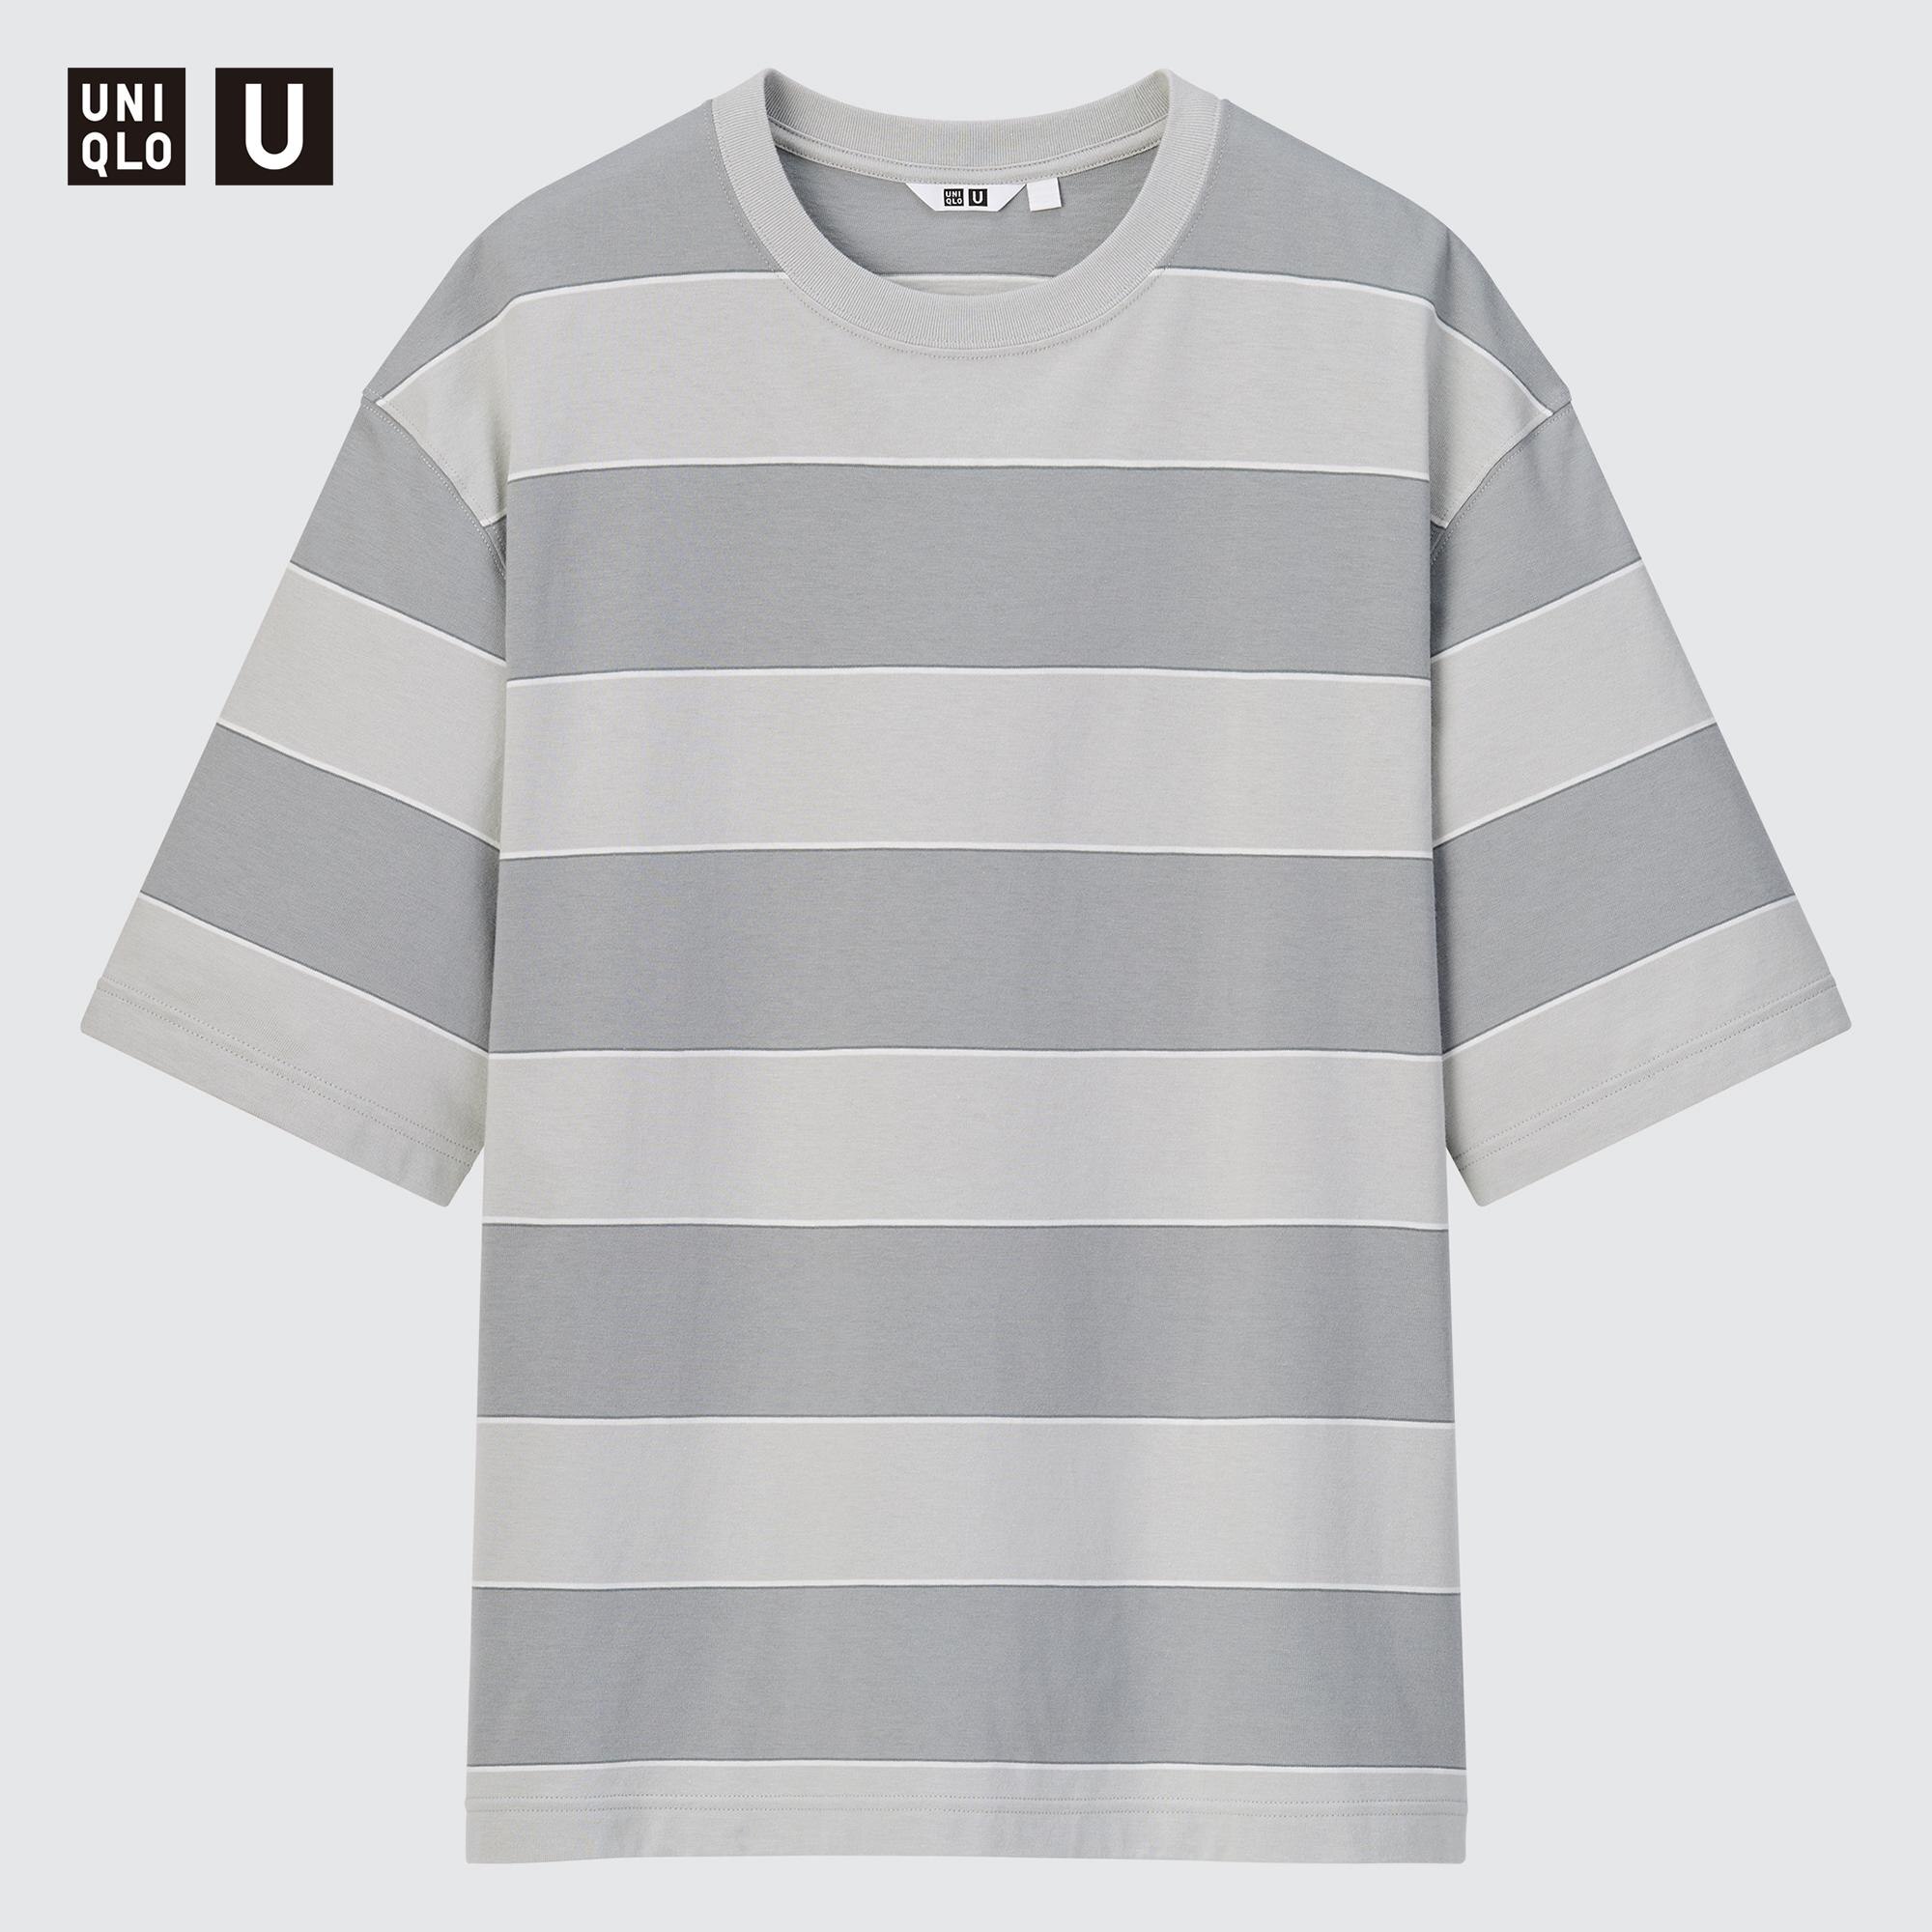 Tshirt Uniqlo Grey size M International in Cotton  29405219